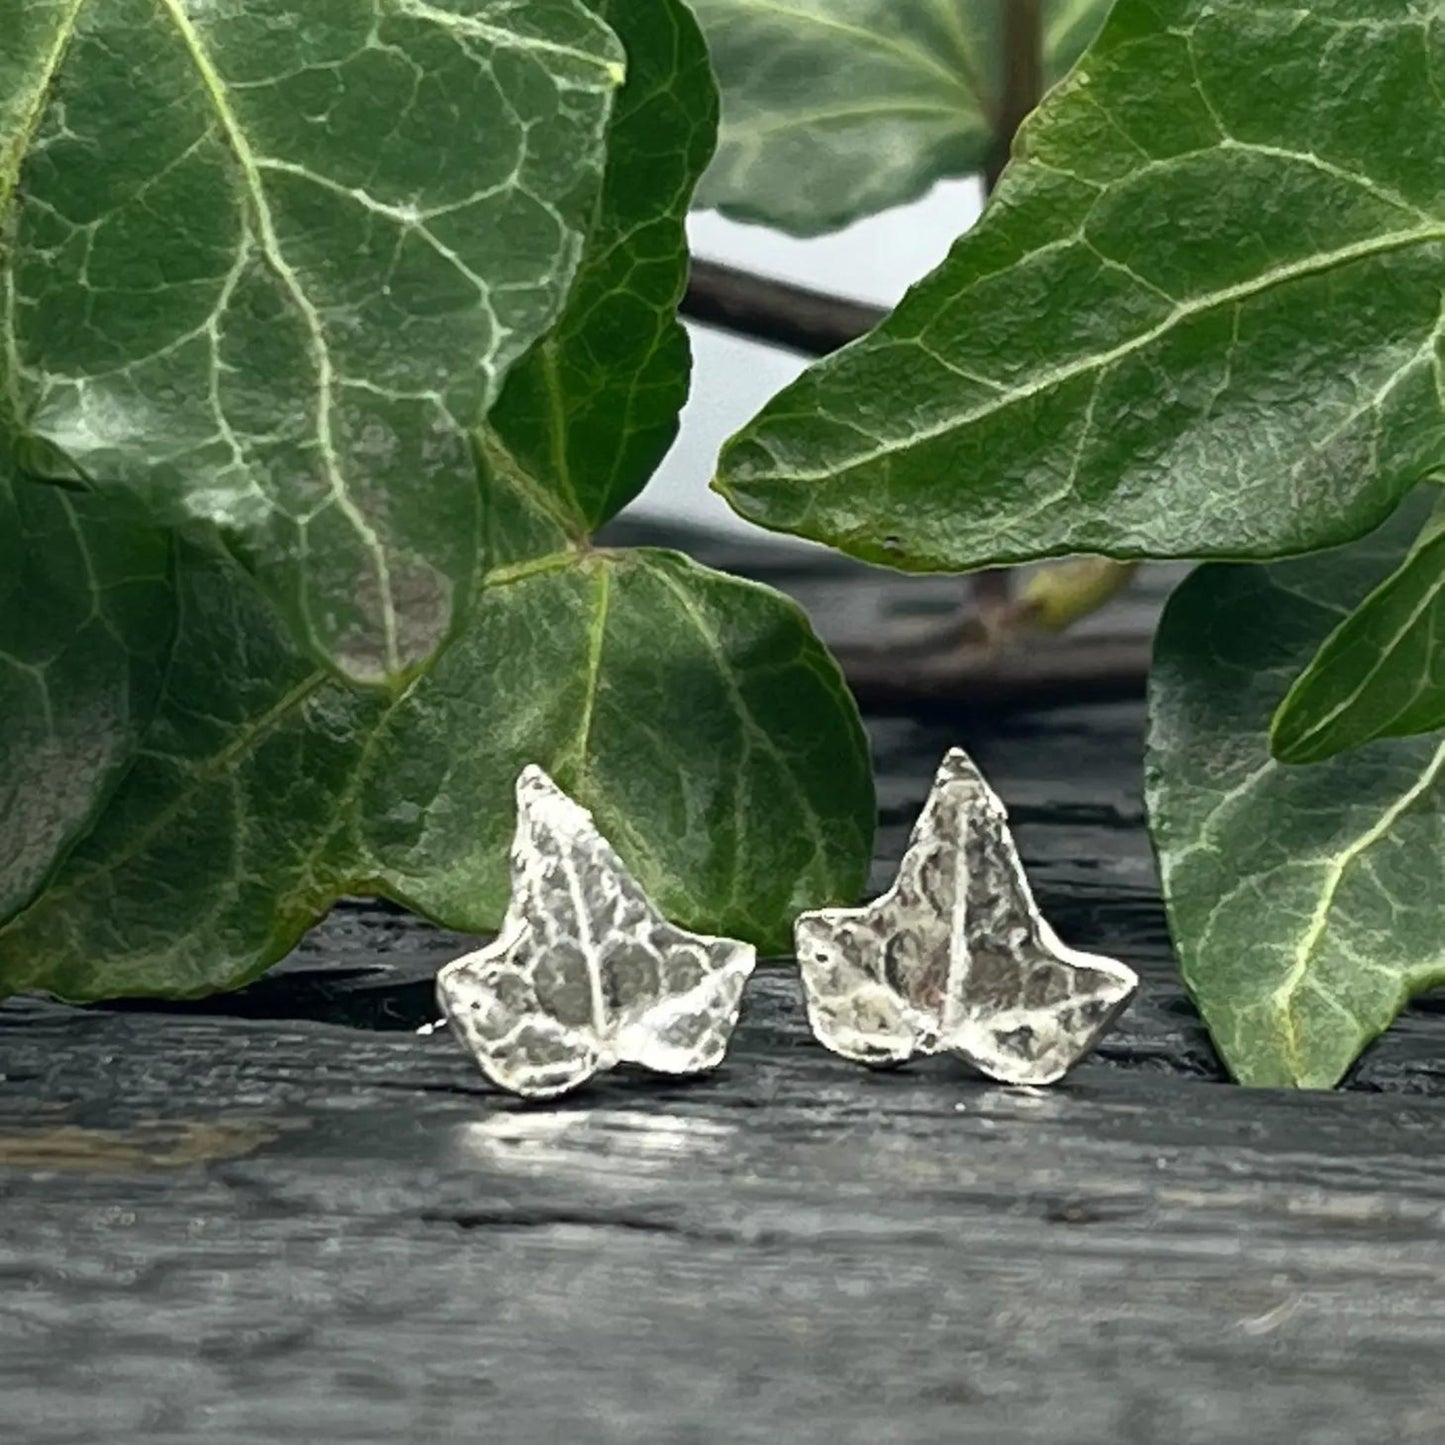 Silver Ivy Leaf Earrings - The Little Jewellery Company